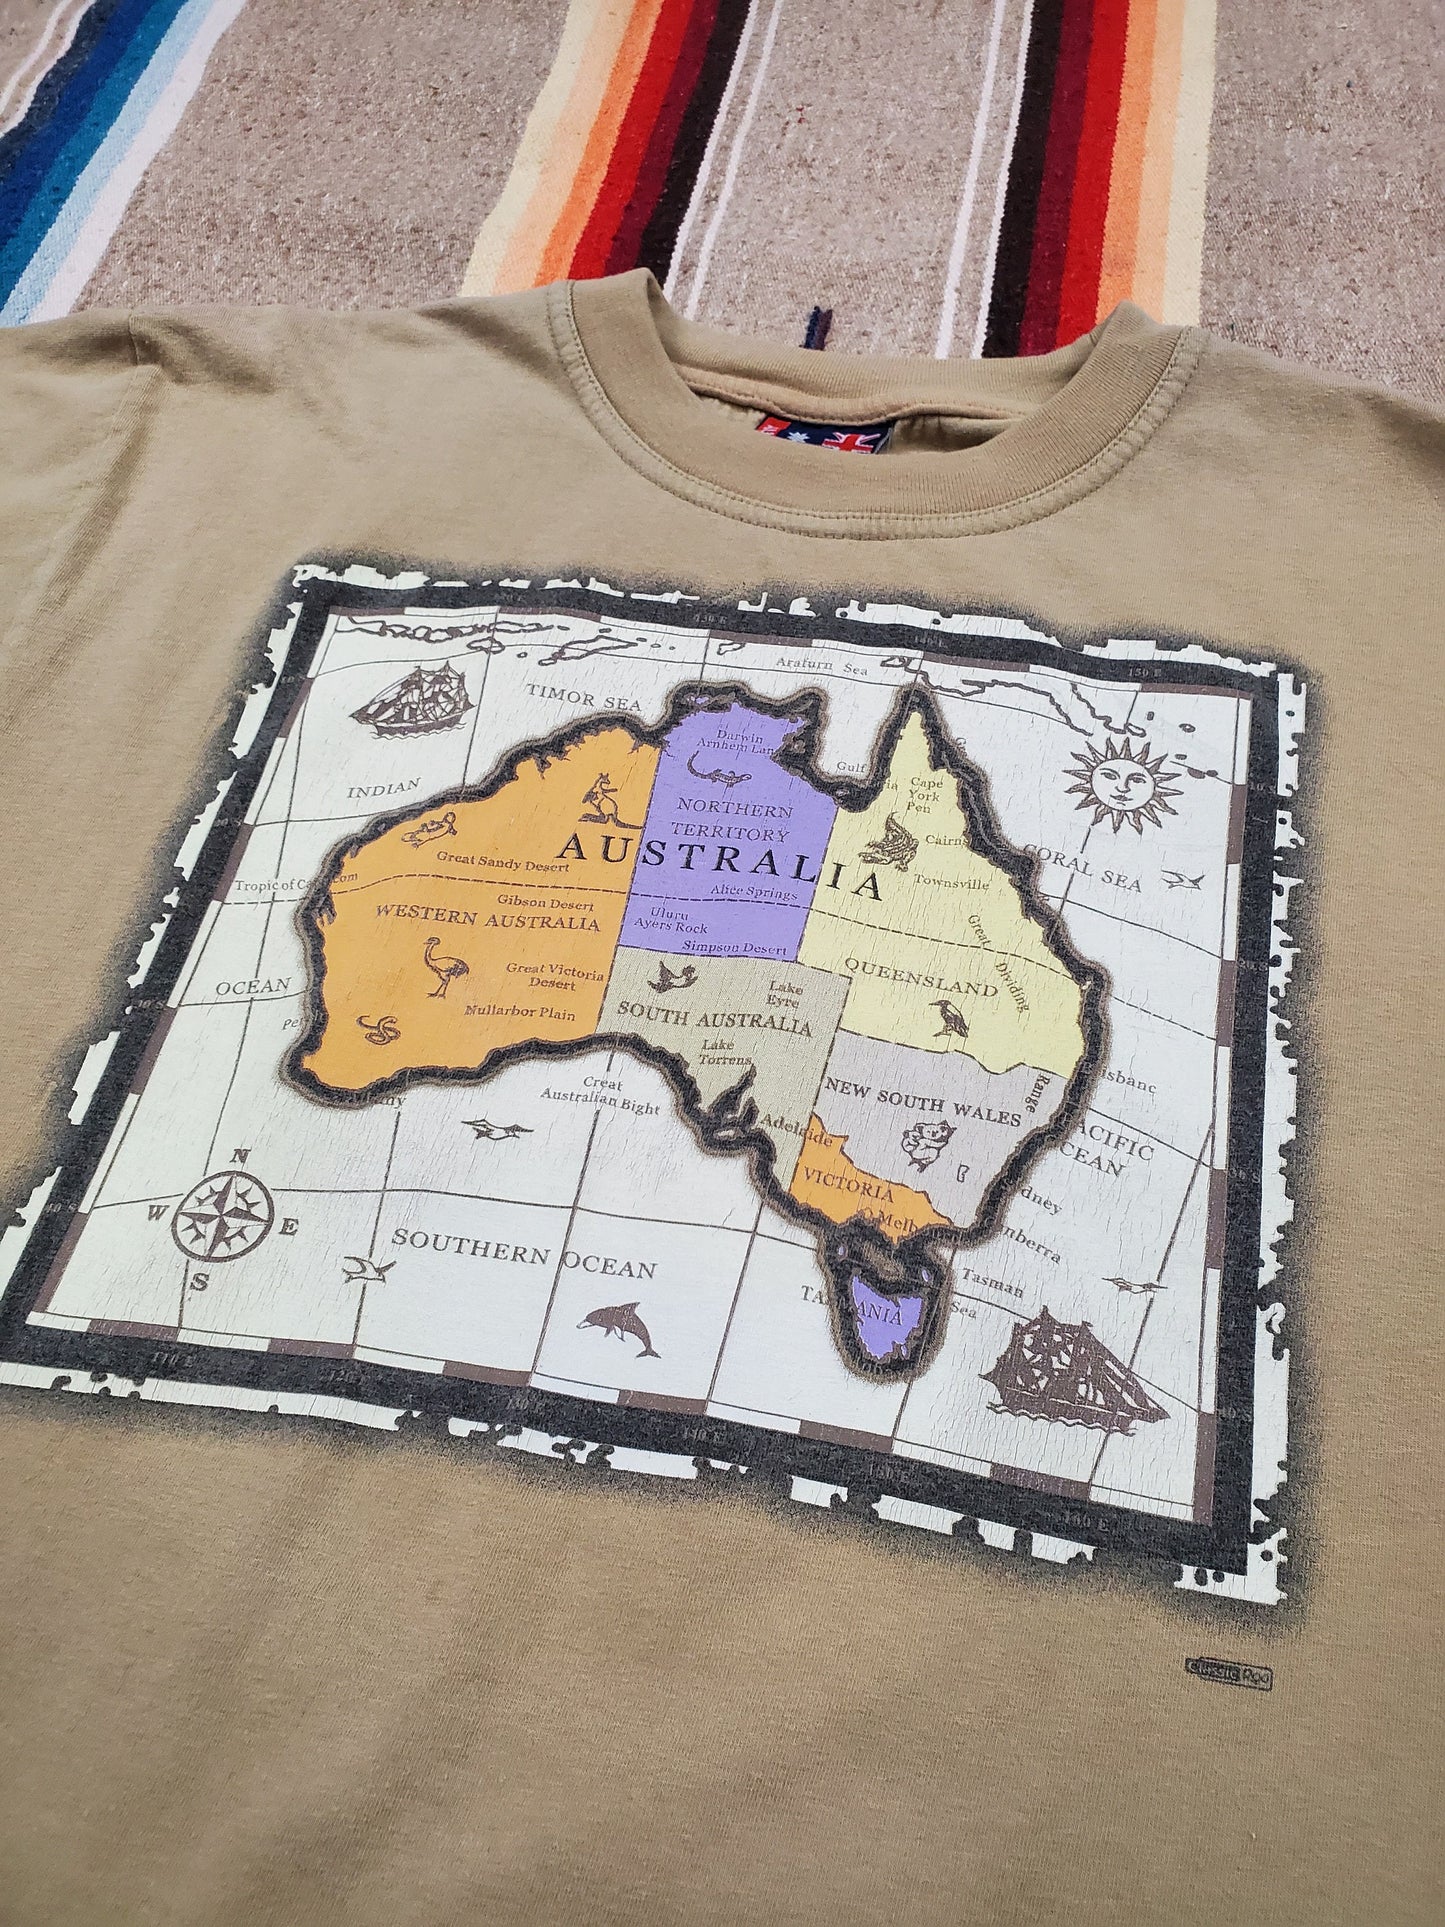 1990s/2000s Map of Australia T-Shirt Size L